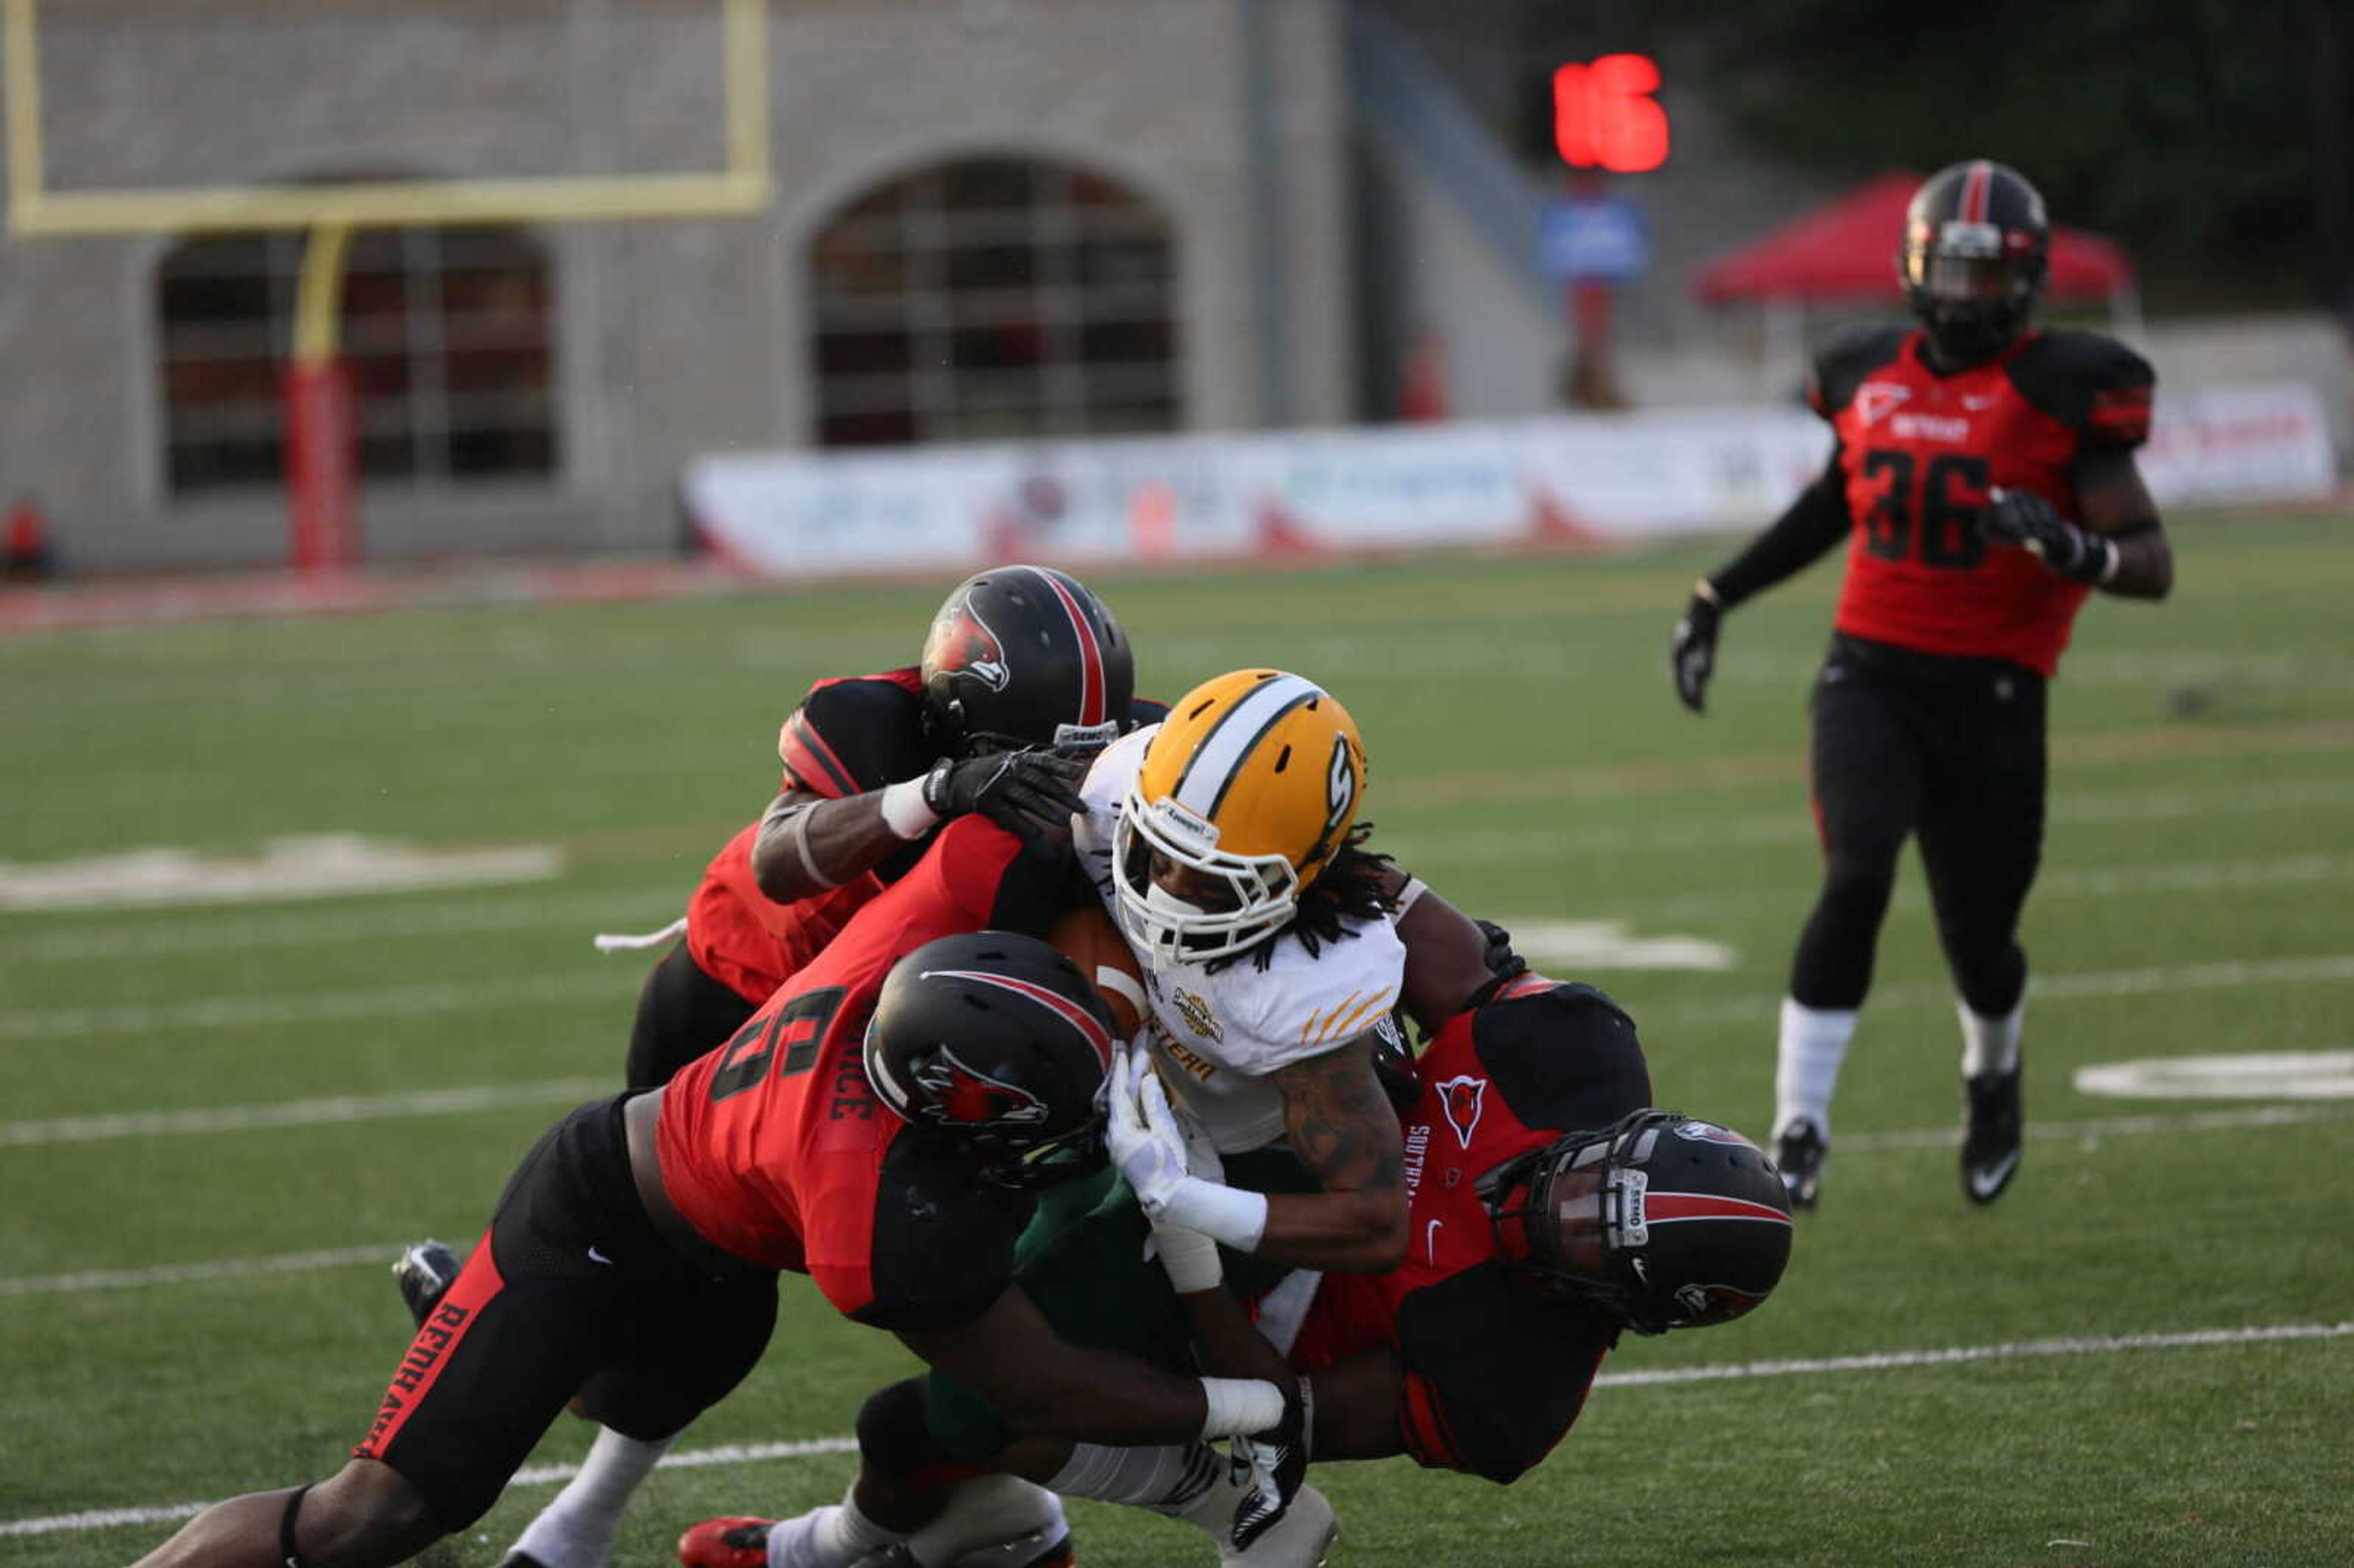 The Southeast Missouri State University Redhawks tackle a Southern Louisiana player. Photo by Jegenaath Mudaliar